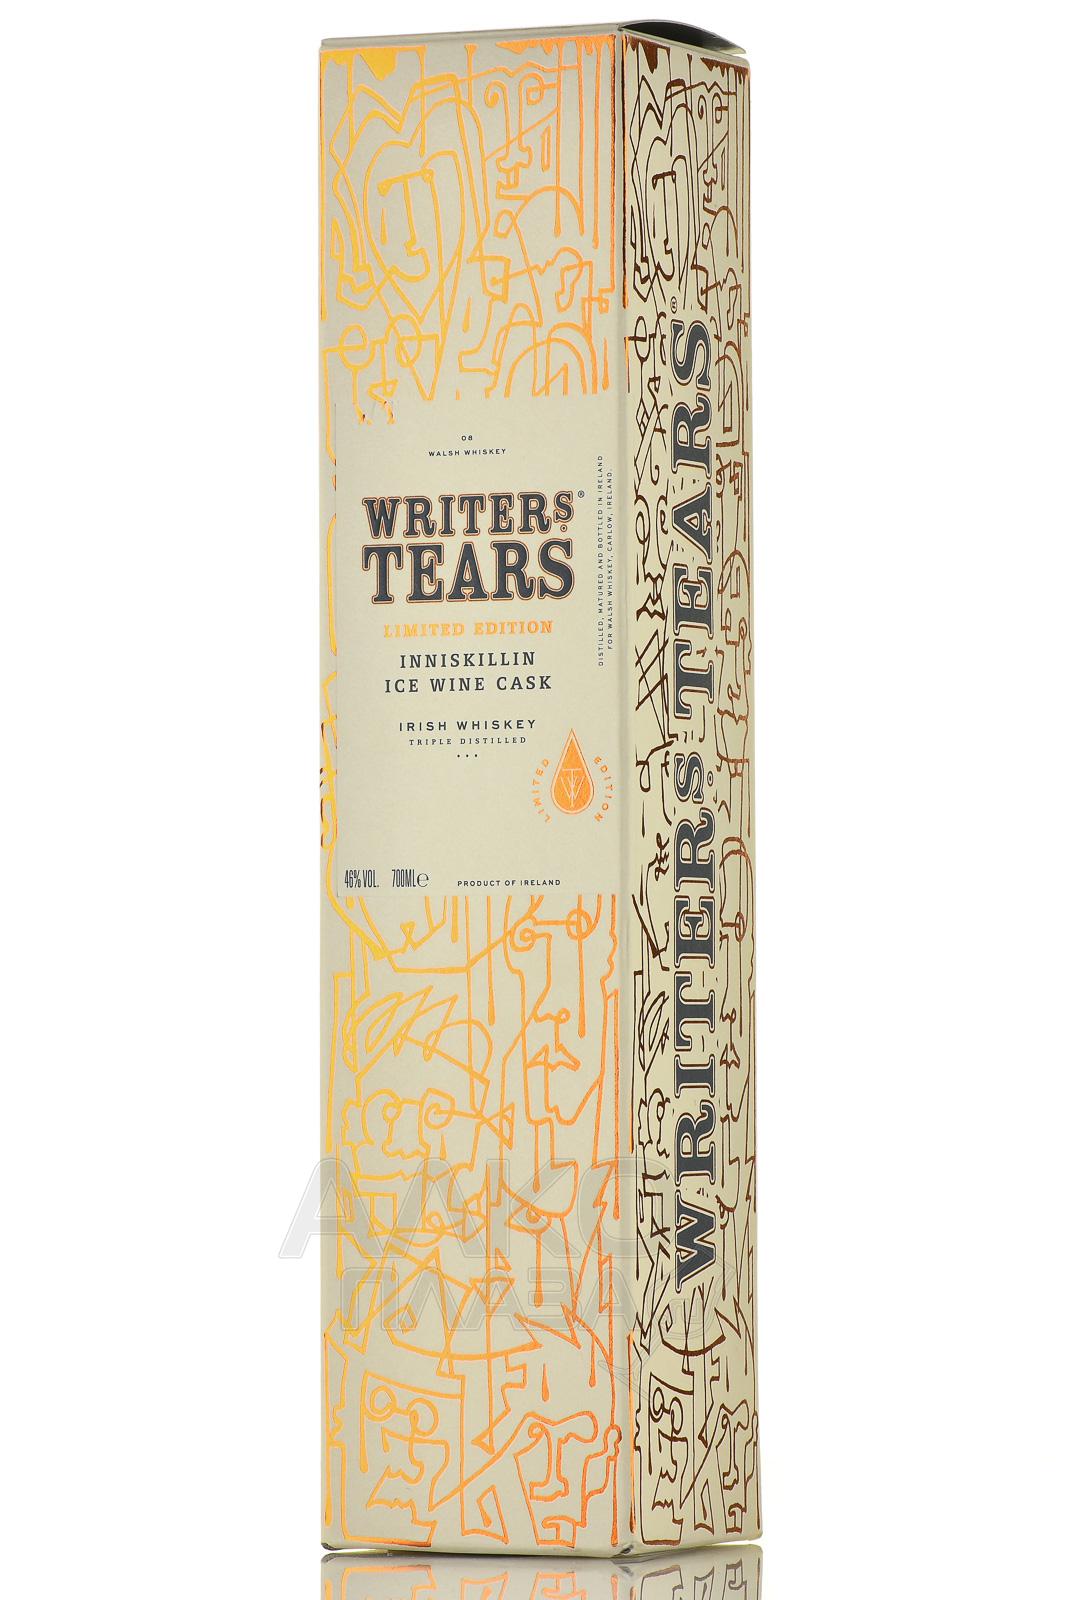 Writers tears виски. Виски райтерс Тирс цена 0.7. Writers tears 0.7